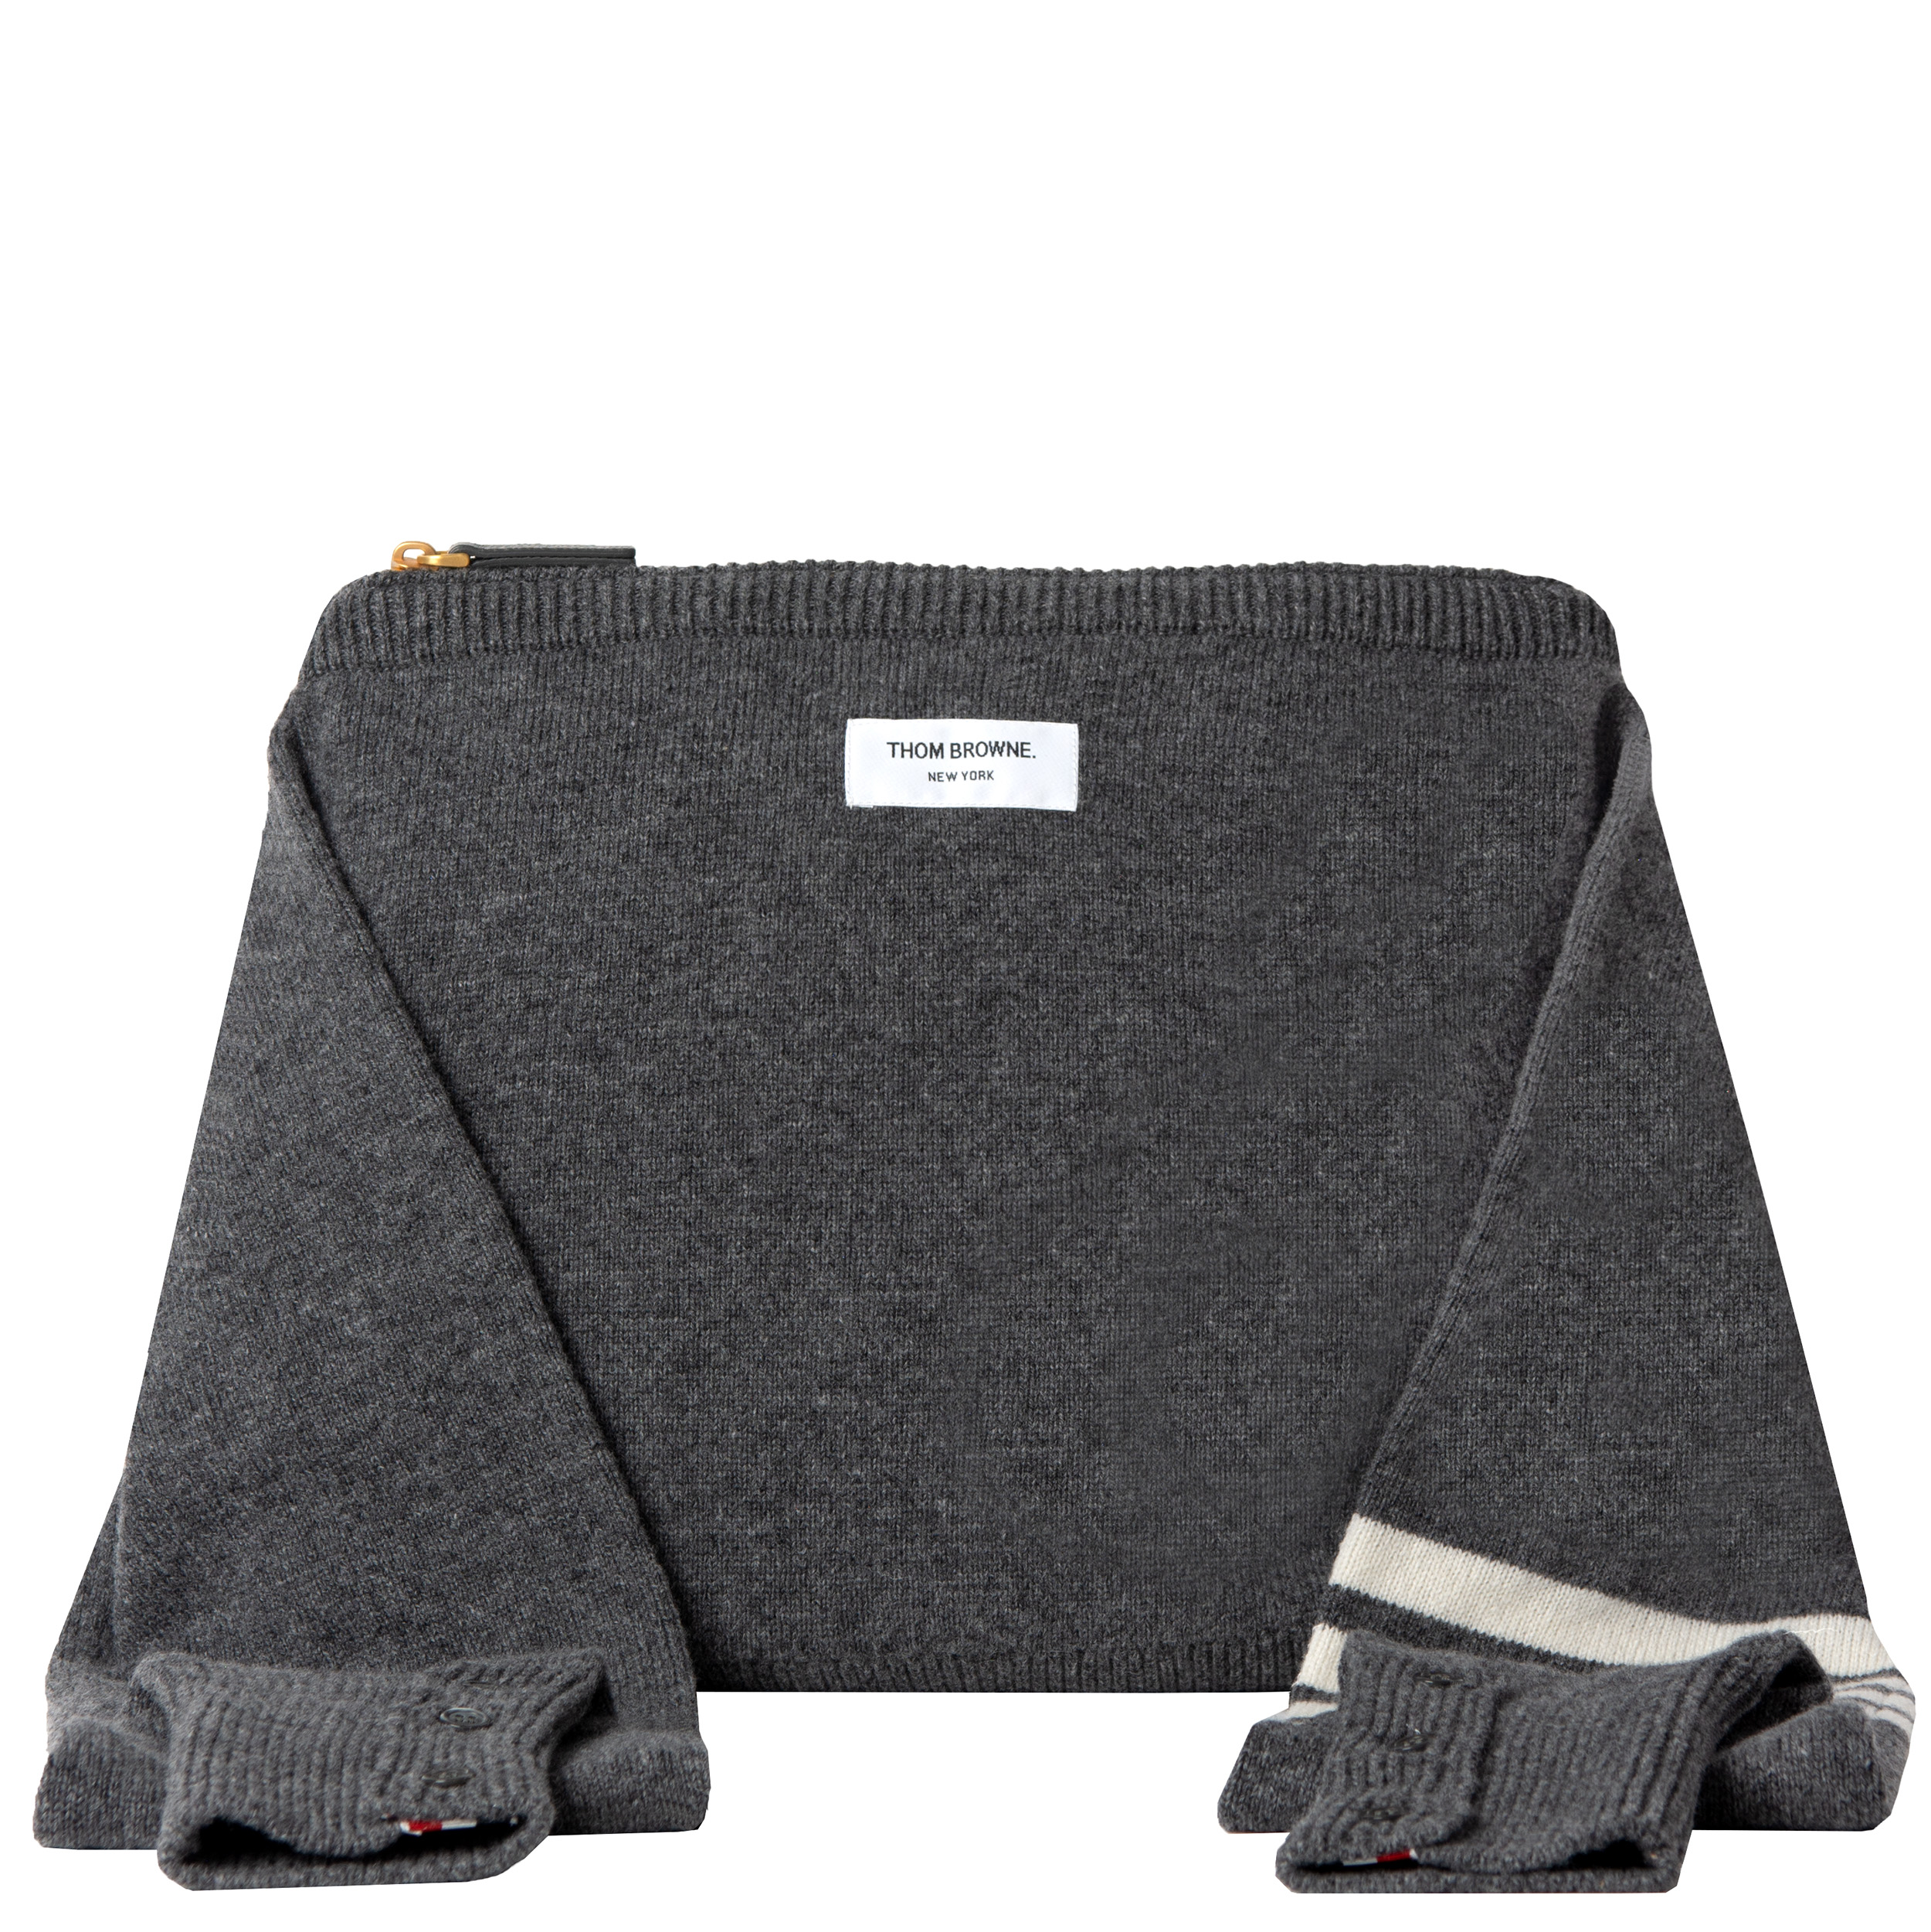 Thom Browne Merino Wool Jumper Bag Dark Grey